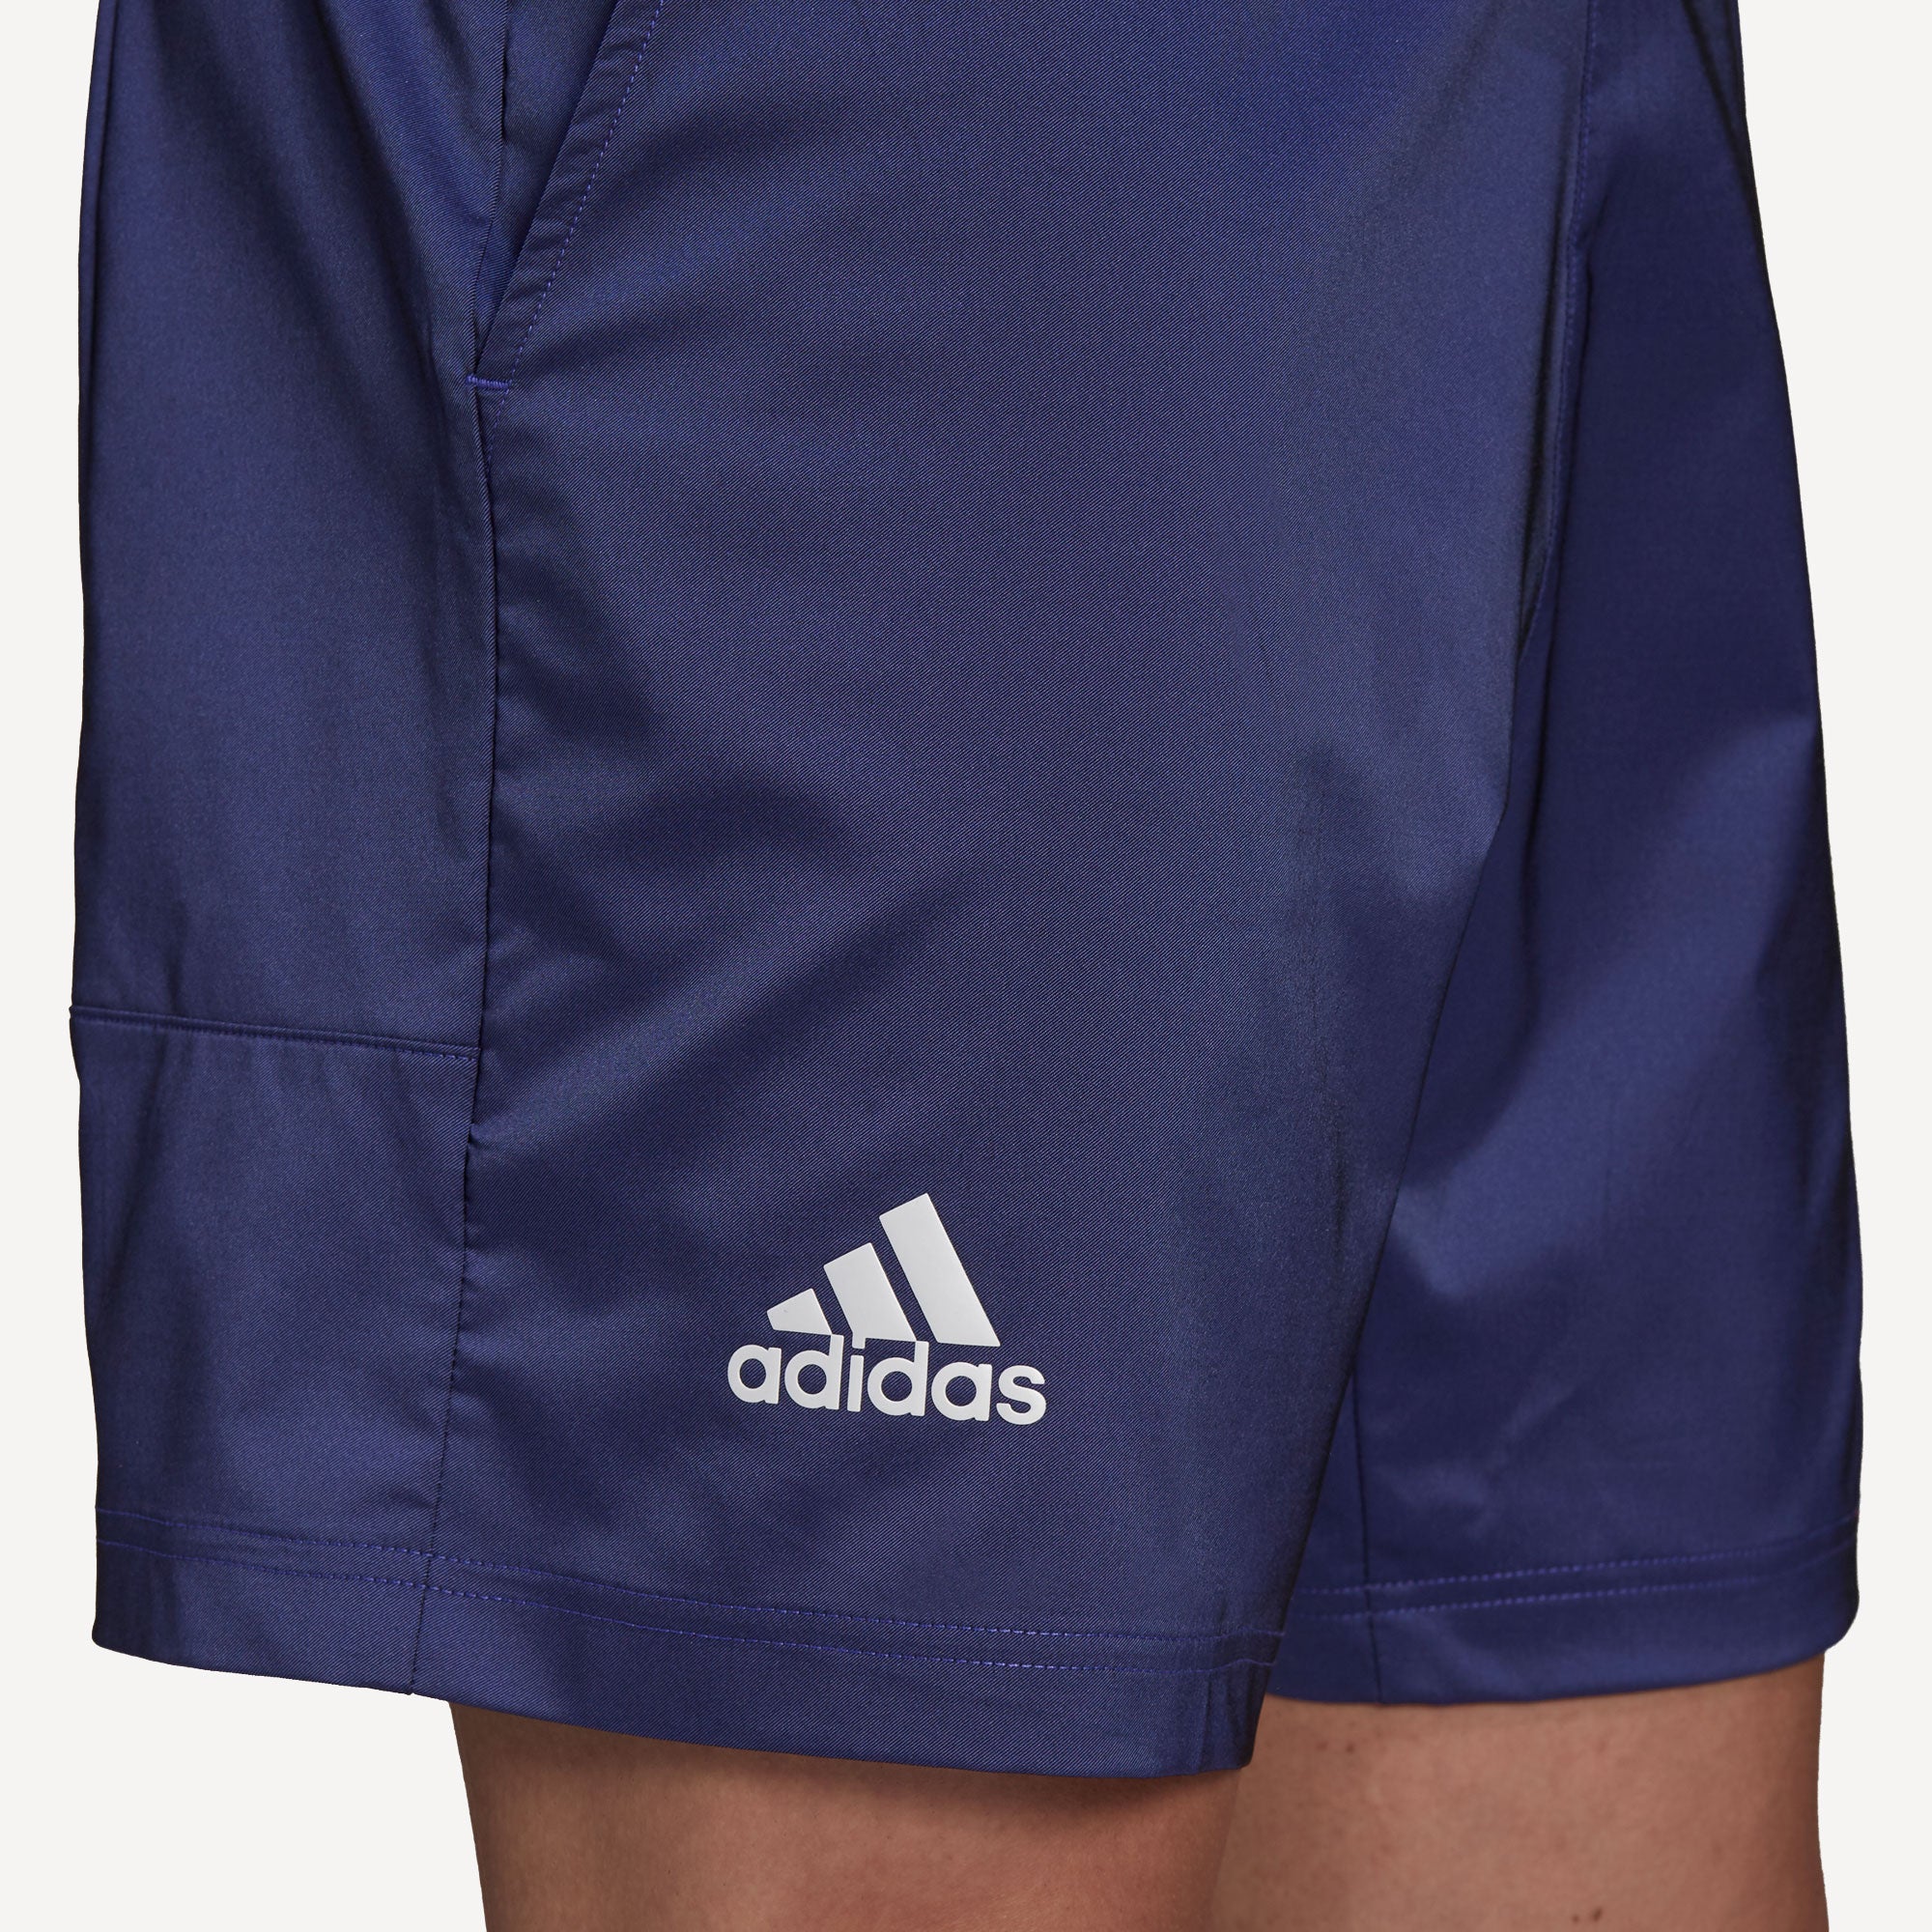 adidas Ergo Primeblue Men's 7-Inch Tennis Shorts Blue (5)